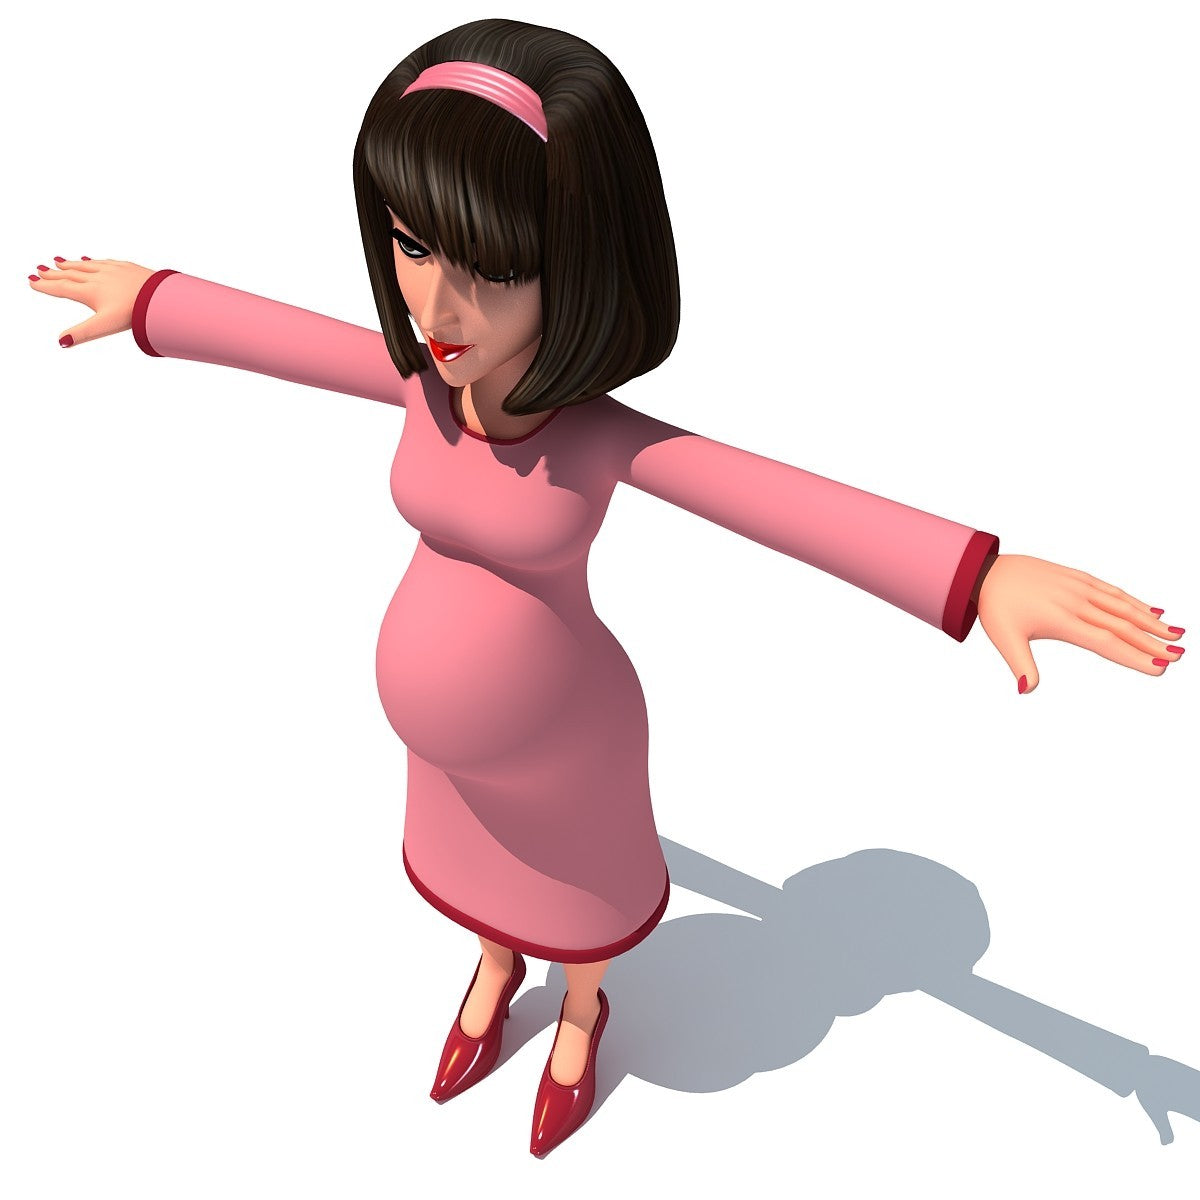 Rigged Cartoon Characters 3D Models